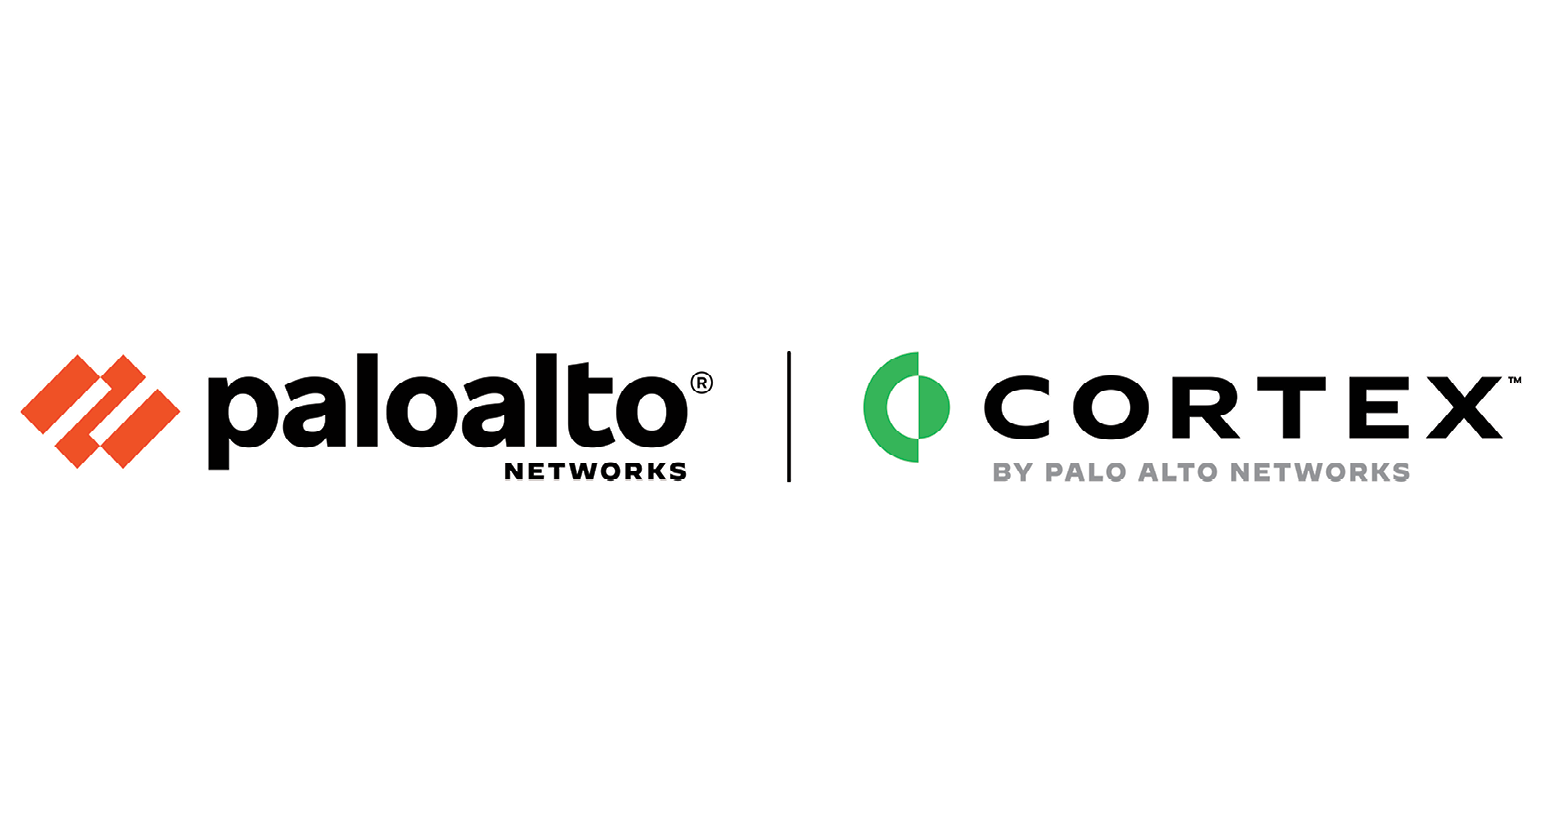 Cortext by Palo Alto Networks Logo